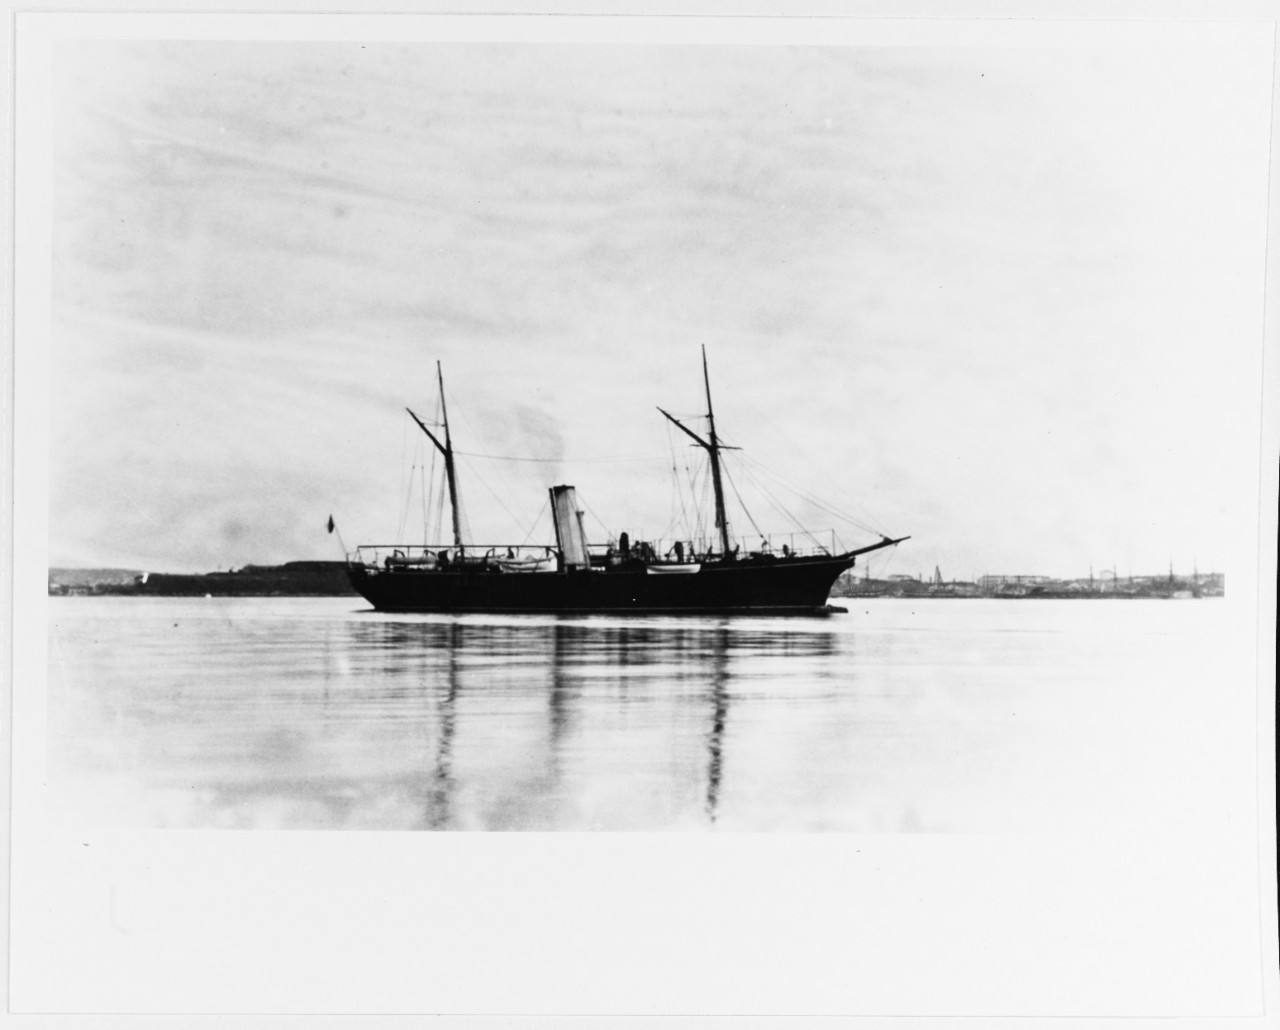 SPALATO (Austrian torpedo gunboat, 1879-1920)